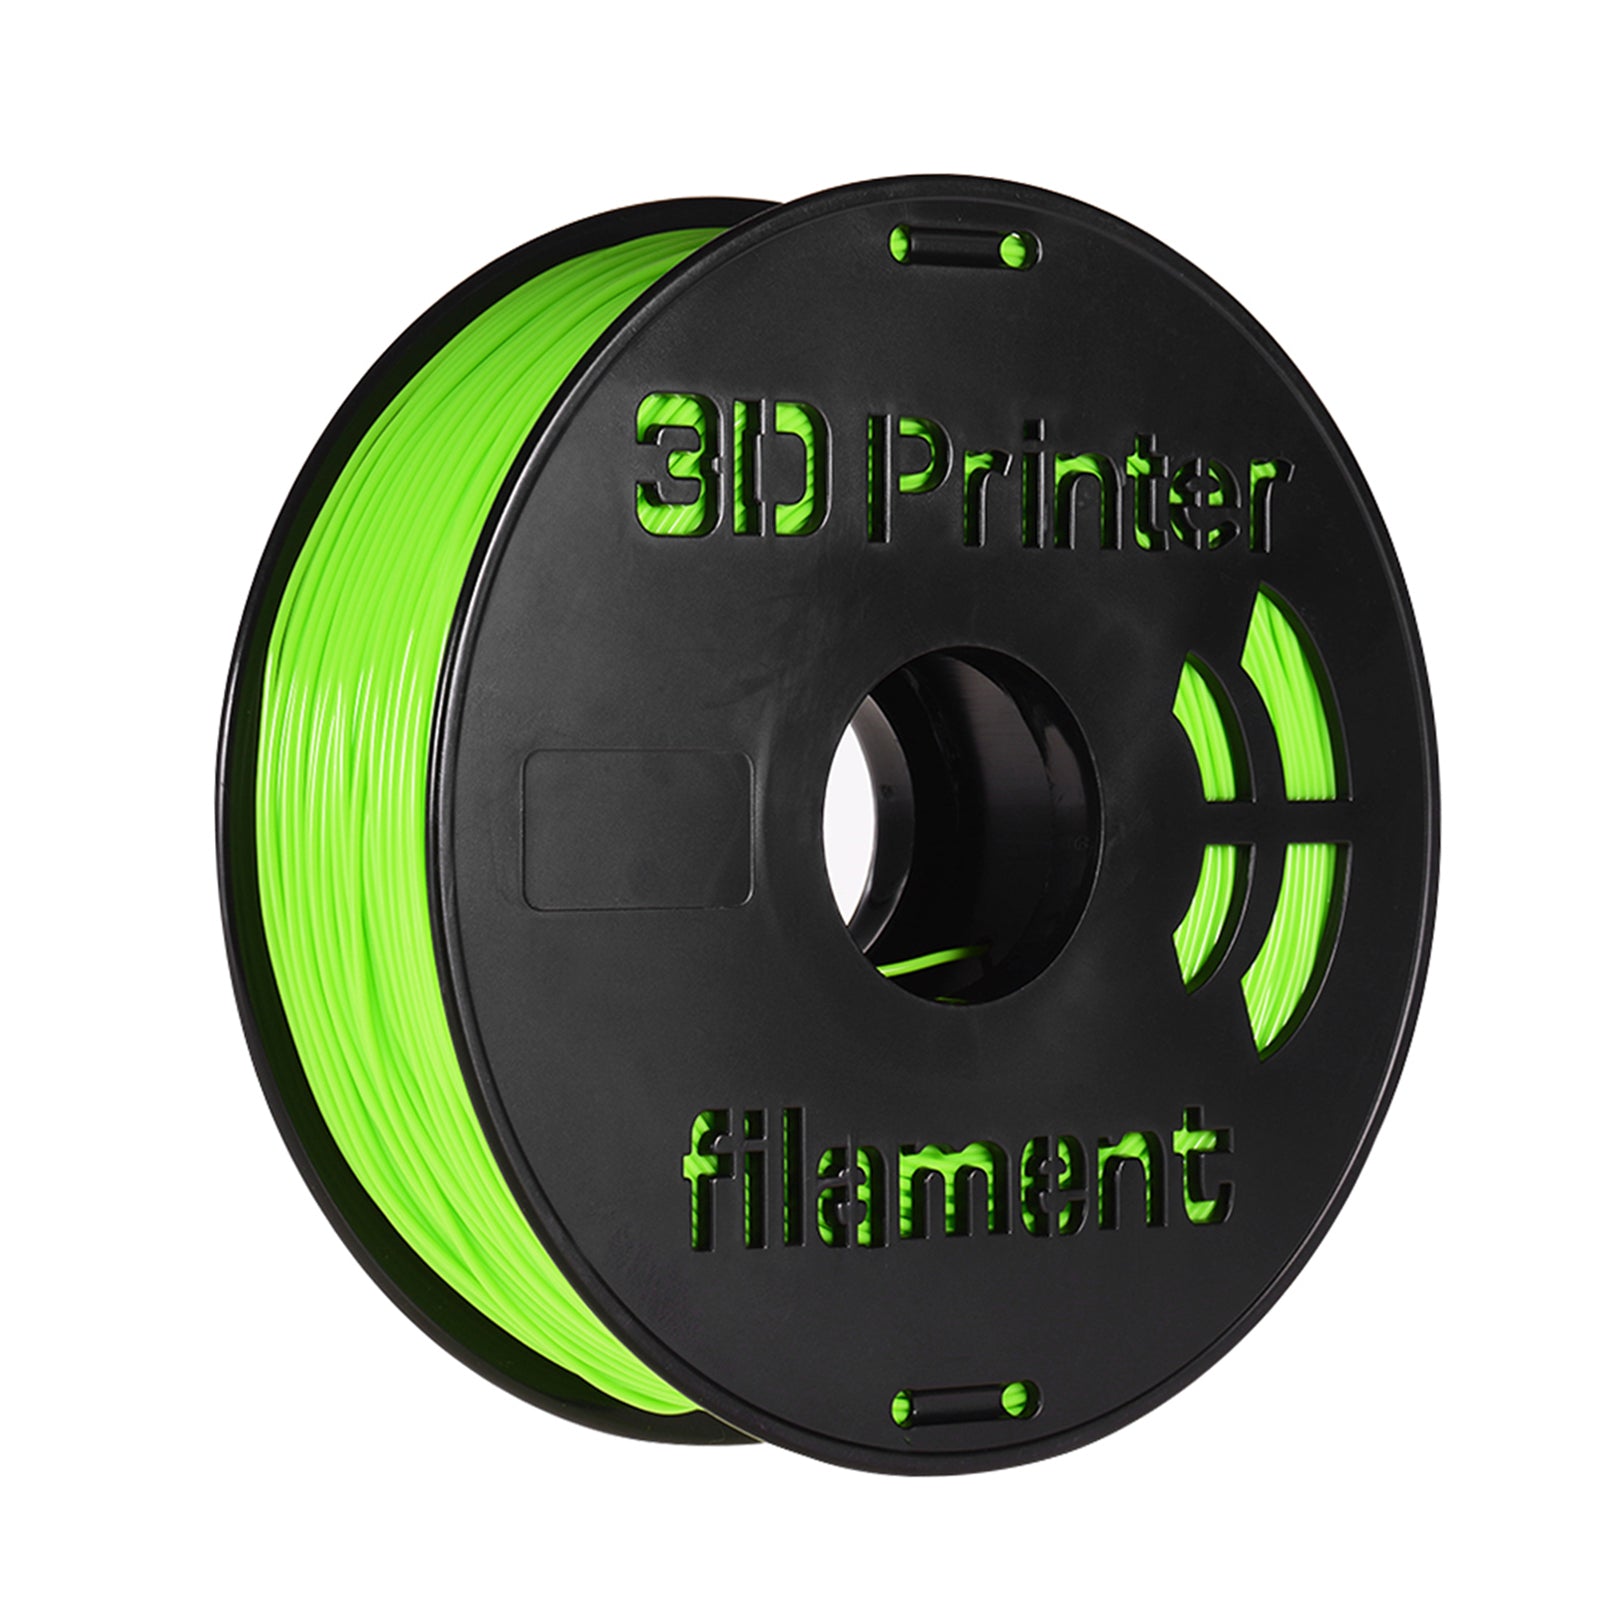 1KG Spool Flexible TPU Filament 1.75mm diameter printing consumables for 3D Printer - Apple Green, Black, Red, Transparent White